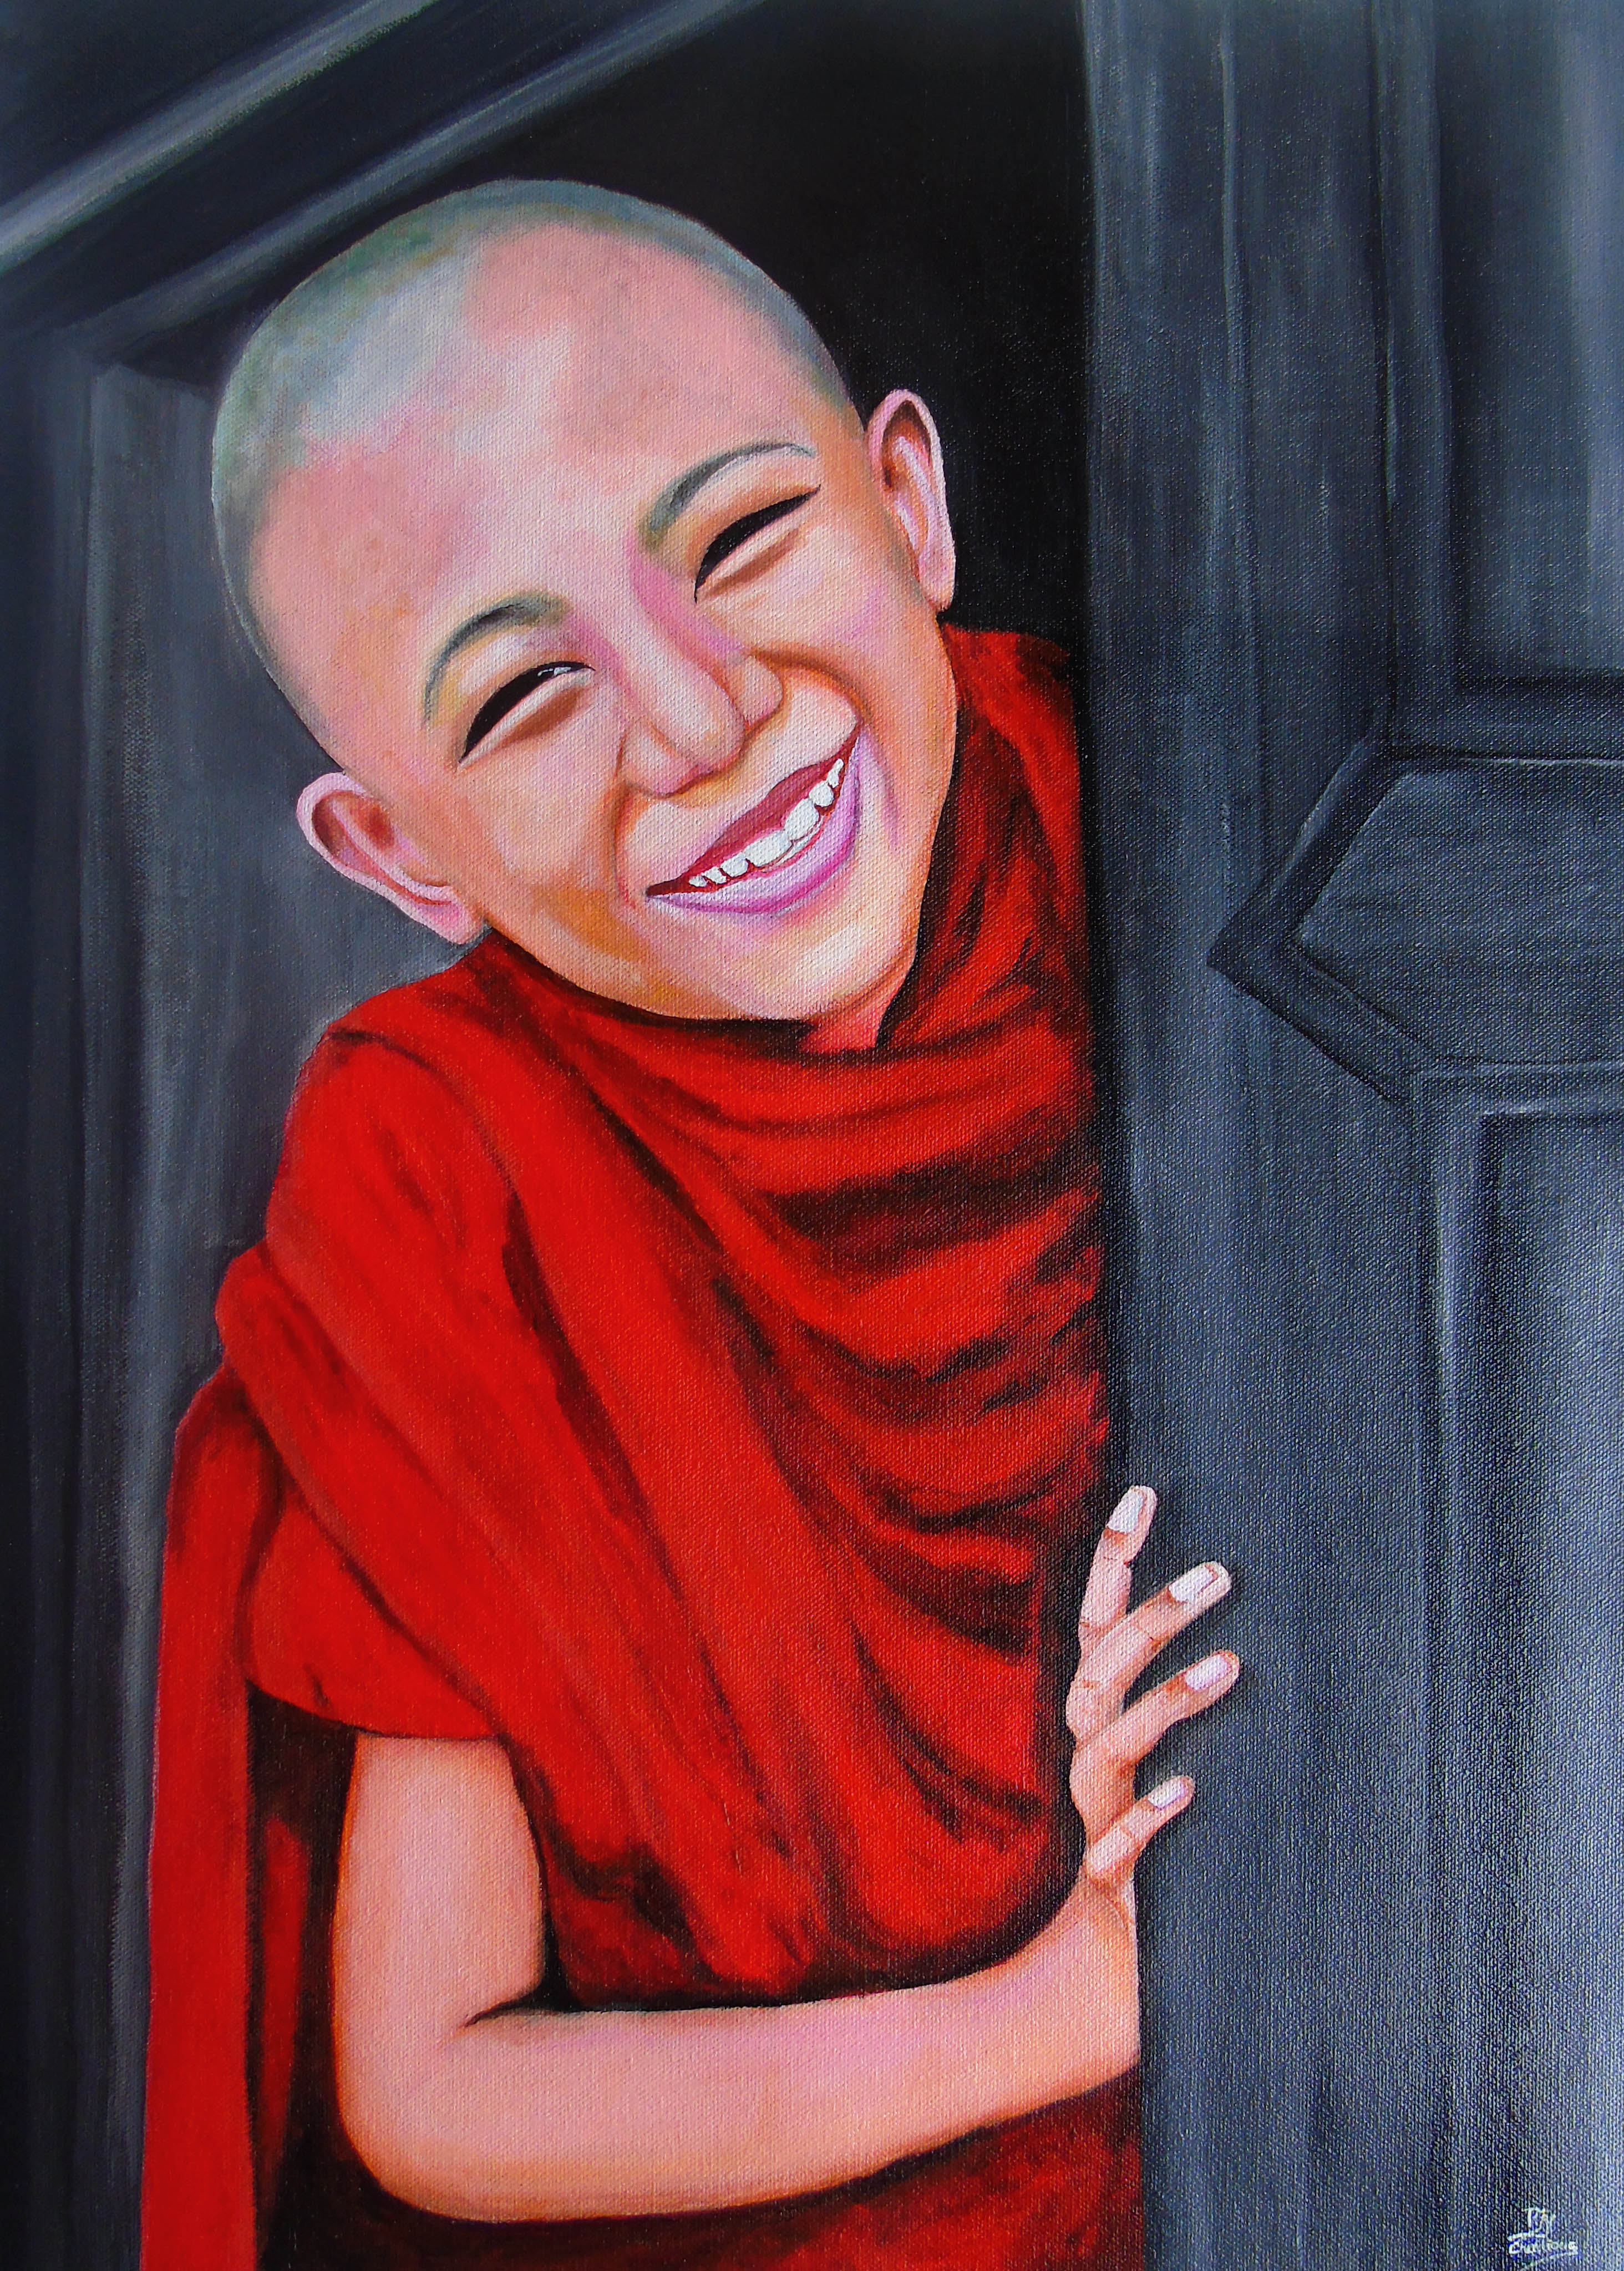 Tibetan Child Monk Boy 15092